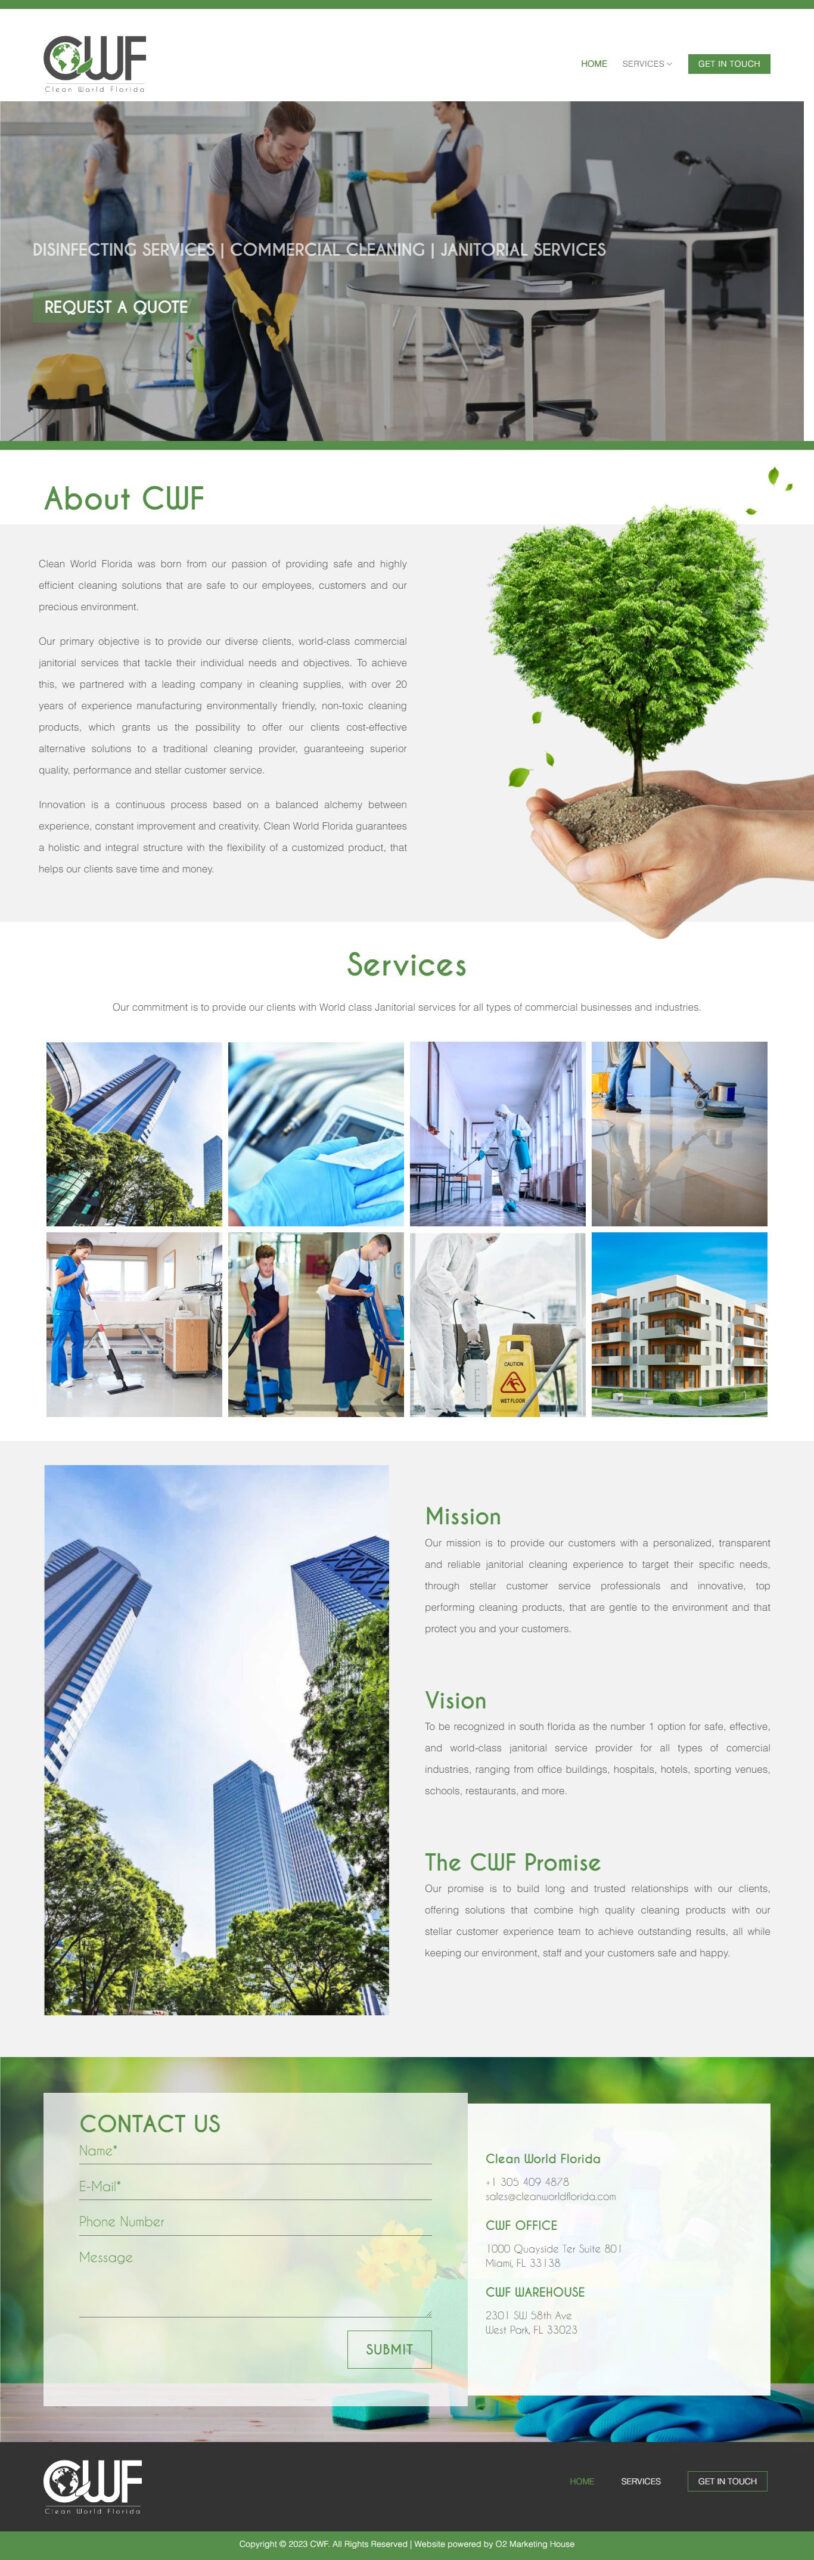 Andres-Jaramillo-Consultor-Web-SEO-Portafolio-Clean-World-Florida_home